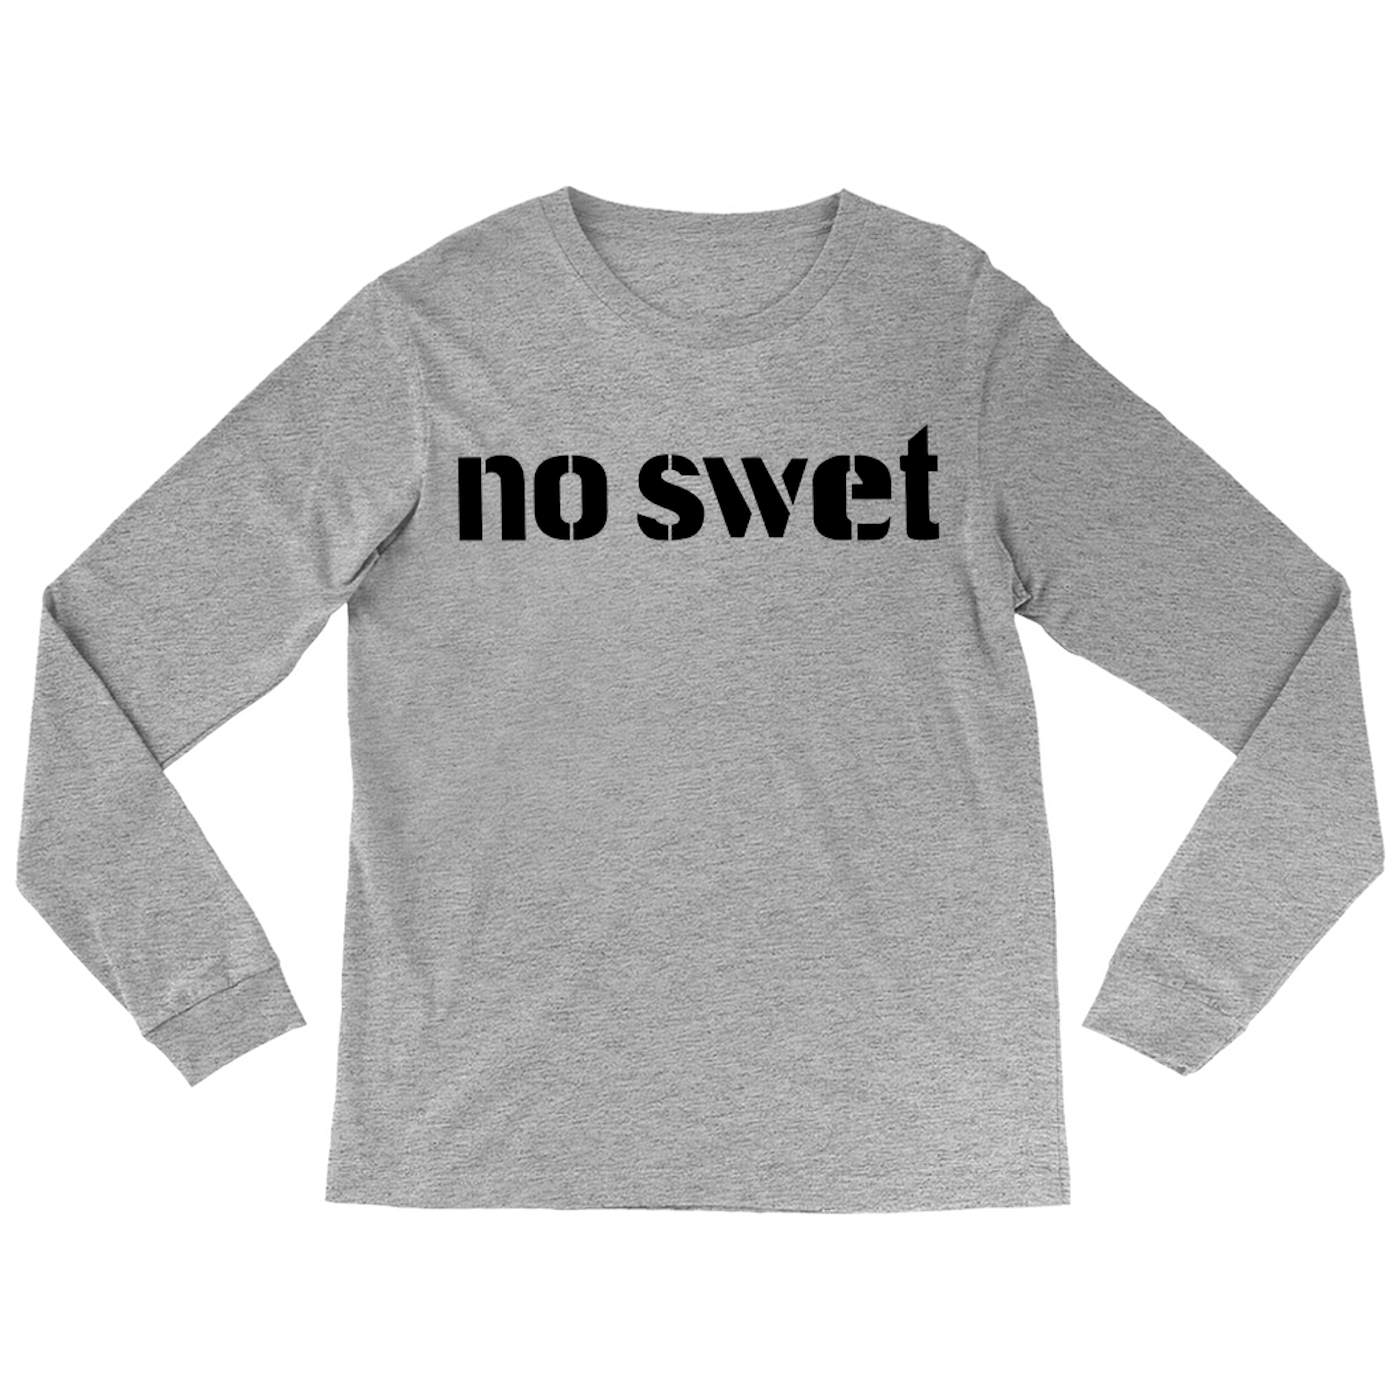 Diana Ross Long Sleeve Shirt | No Swet Worn By Diana Ross Diana Ross Shirt